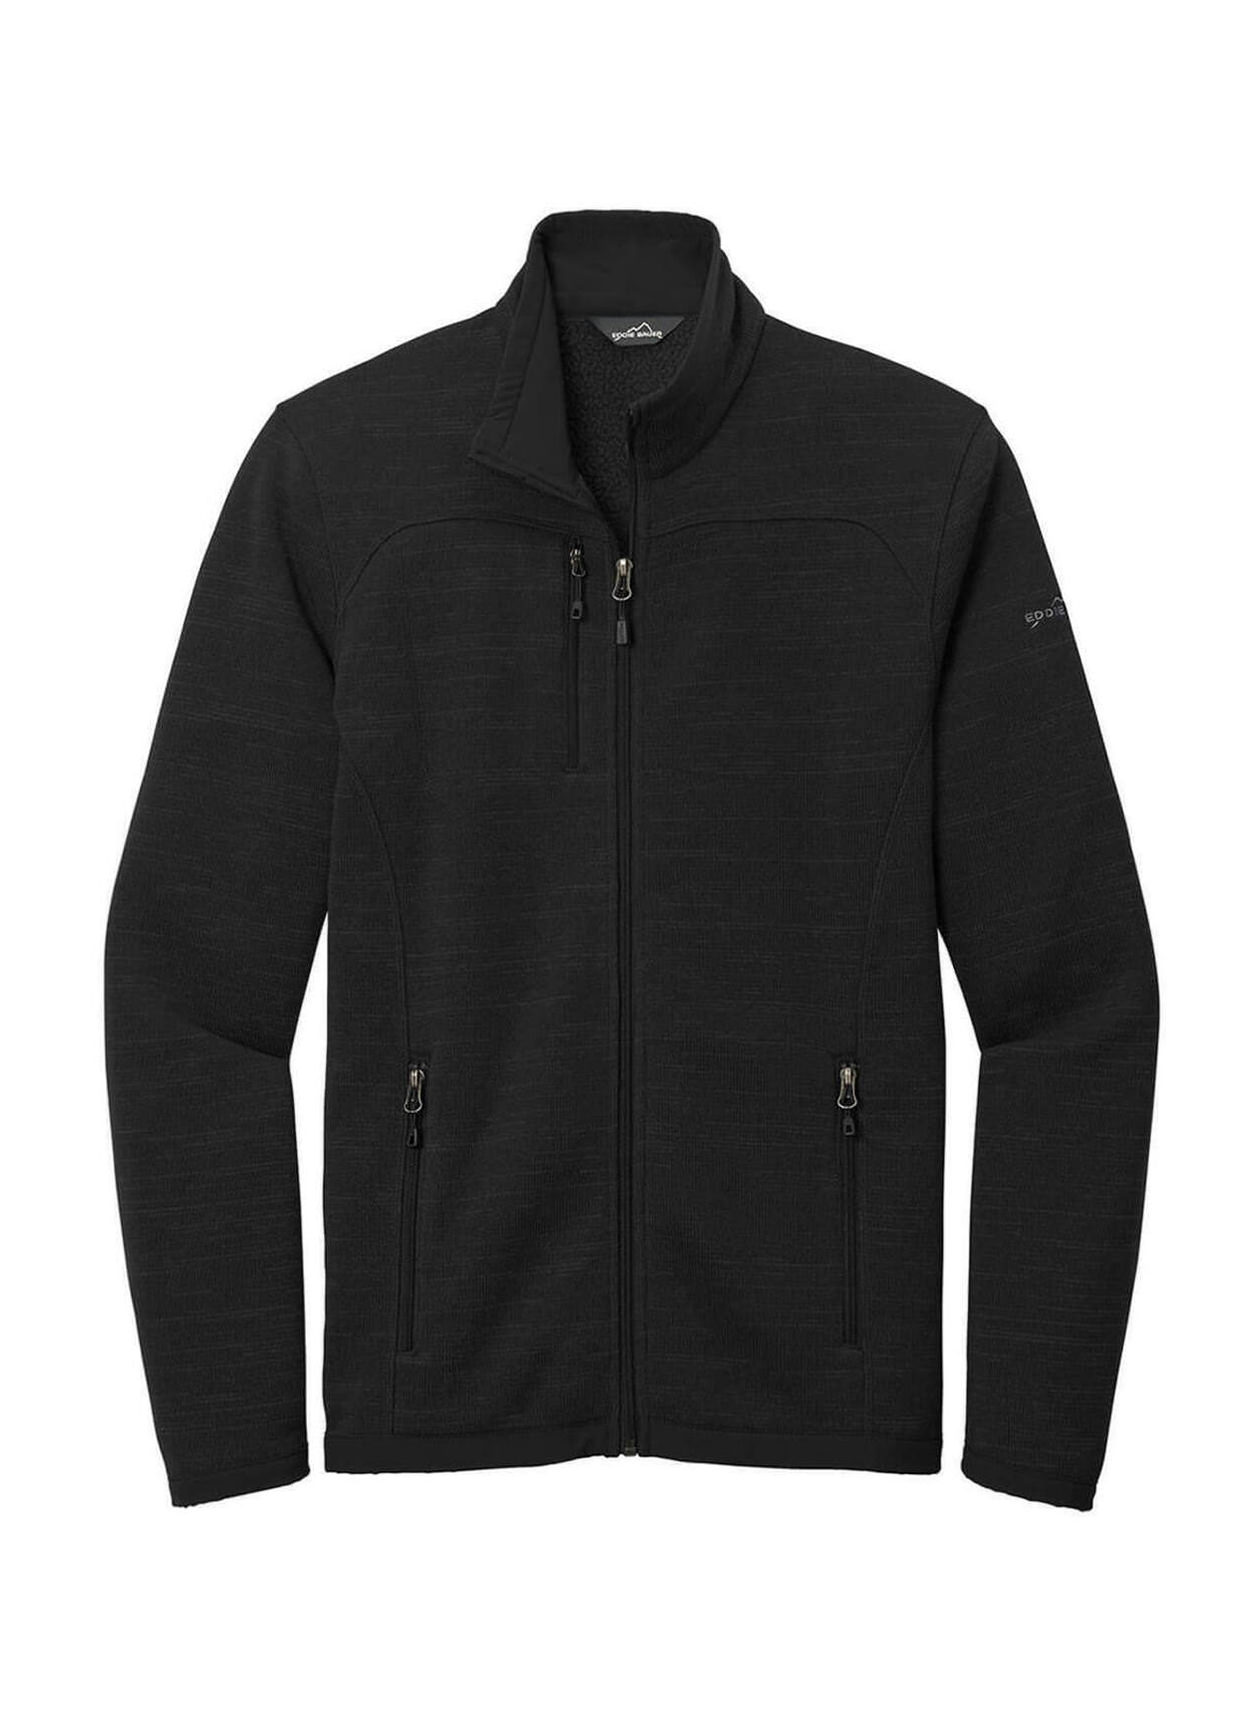 Corporate Eddie Bauer Men's Black Sweater Fleece Jacket | Custom Jackets